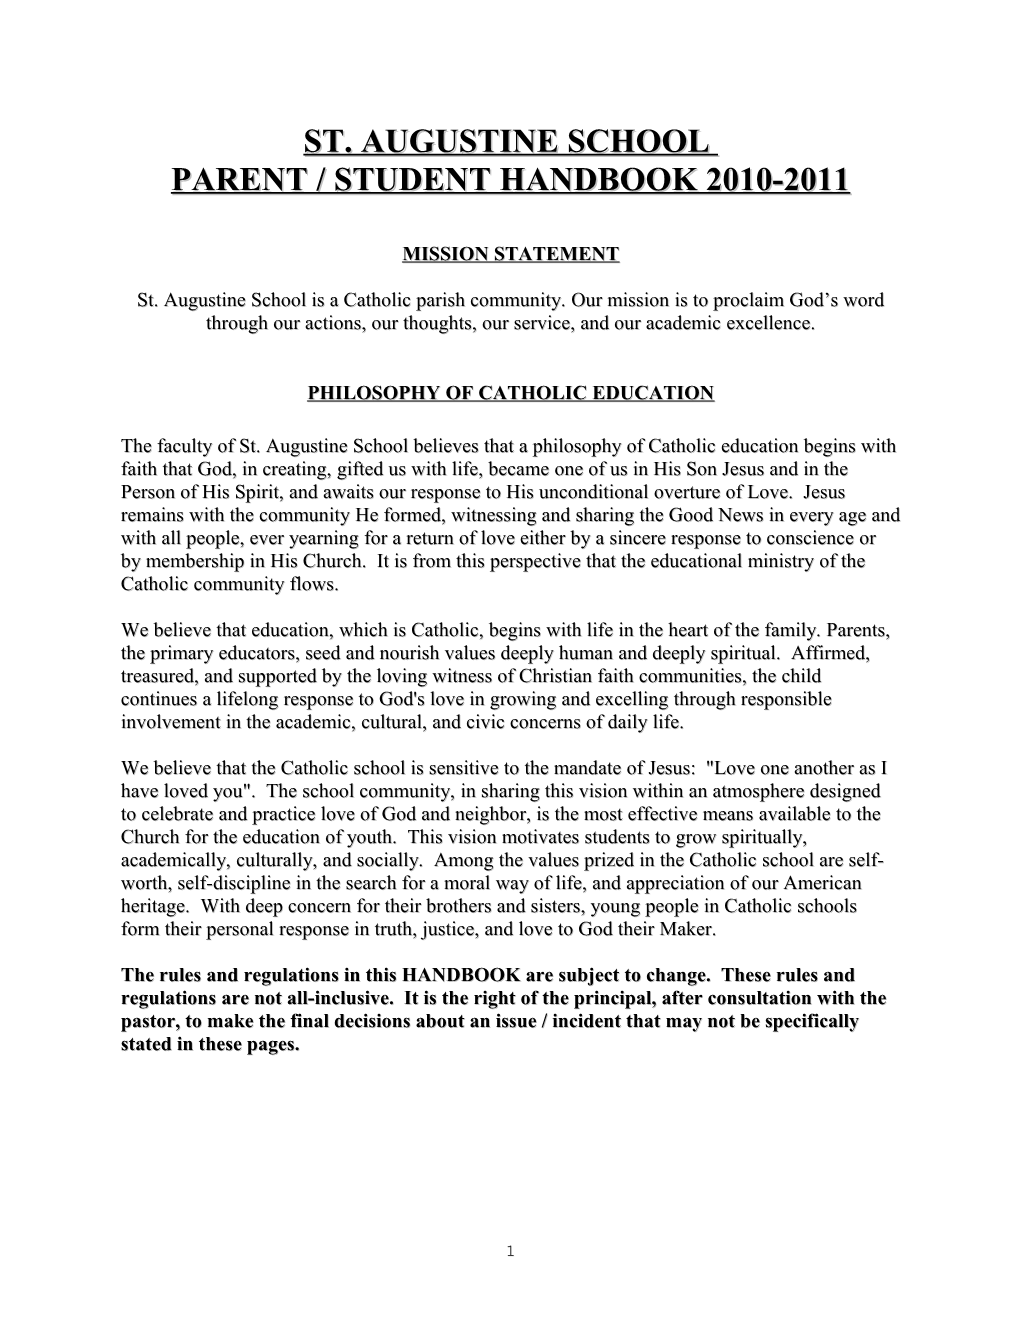 Parent / Student Handbook 2010-2011